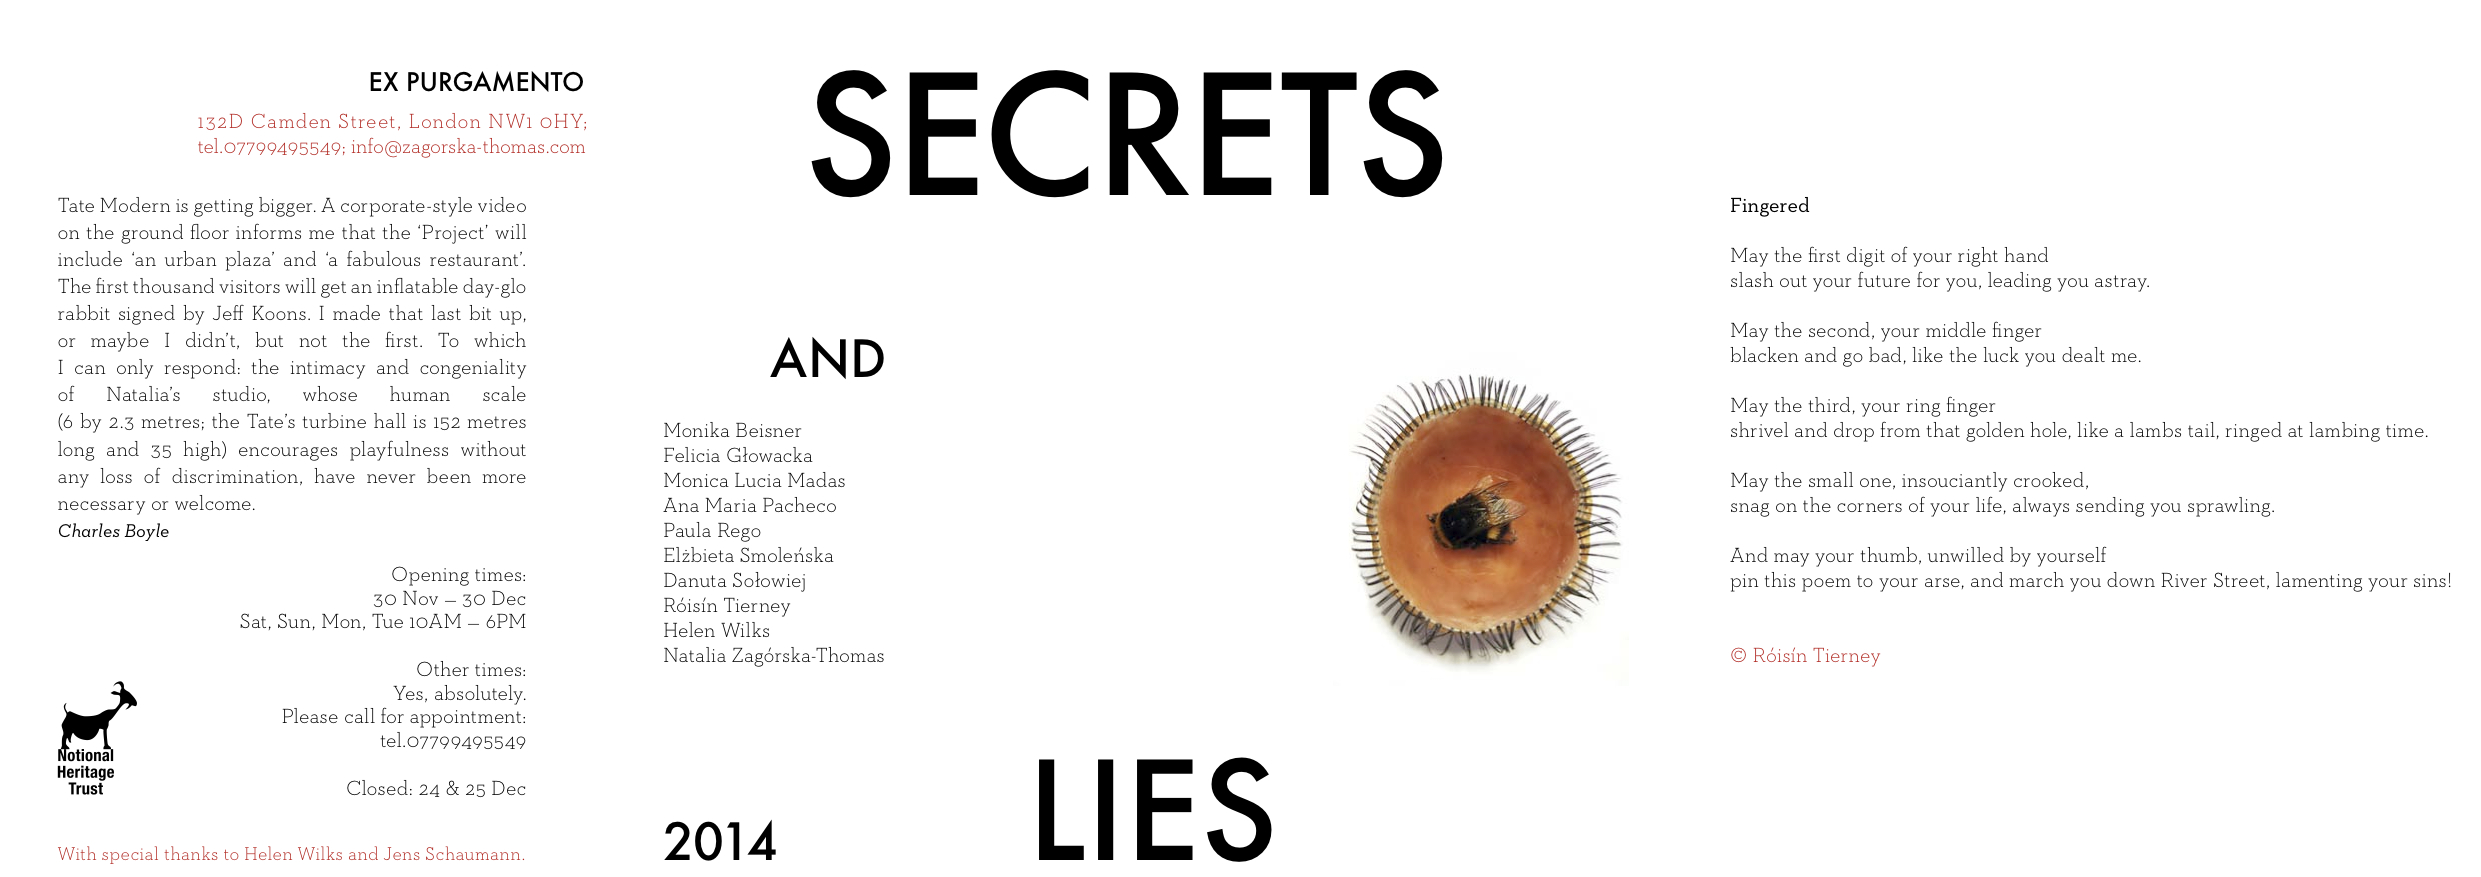 secrets and lies catalogue 1